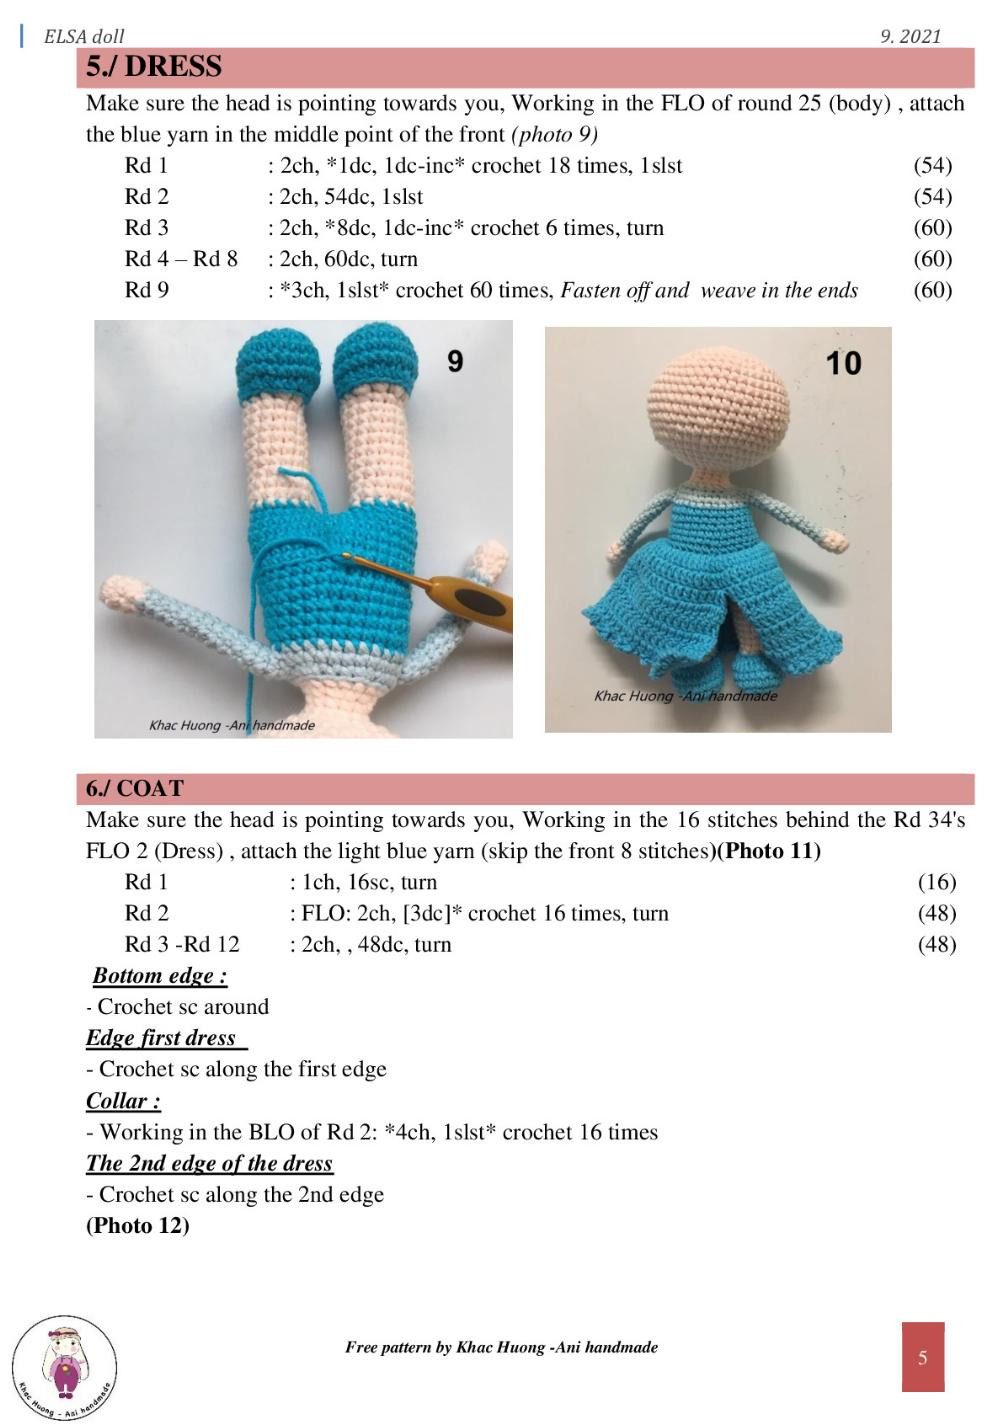 ELSA DOLL crochet pattern